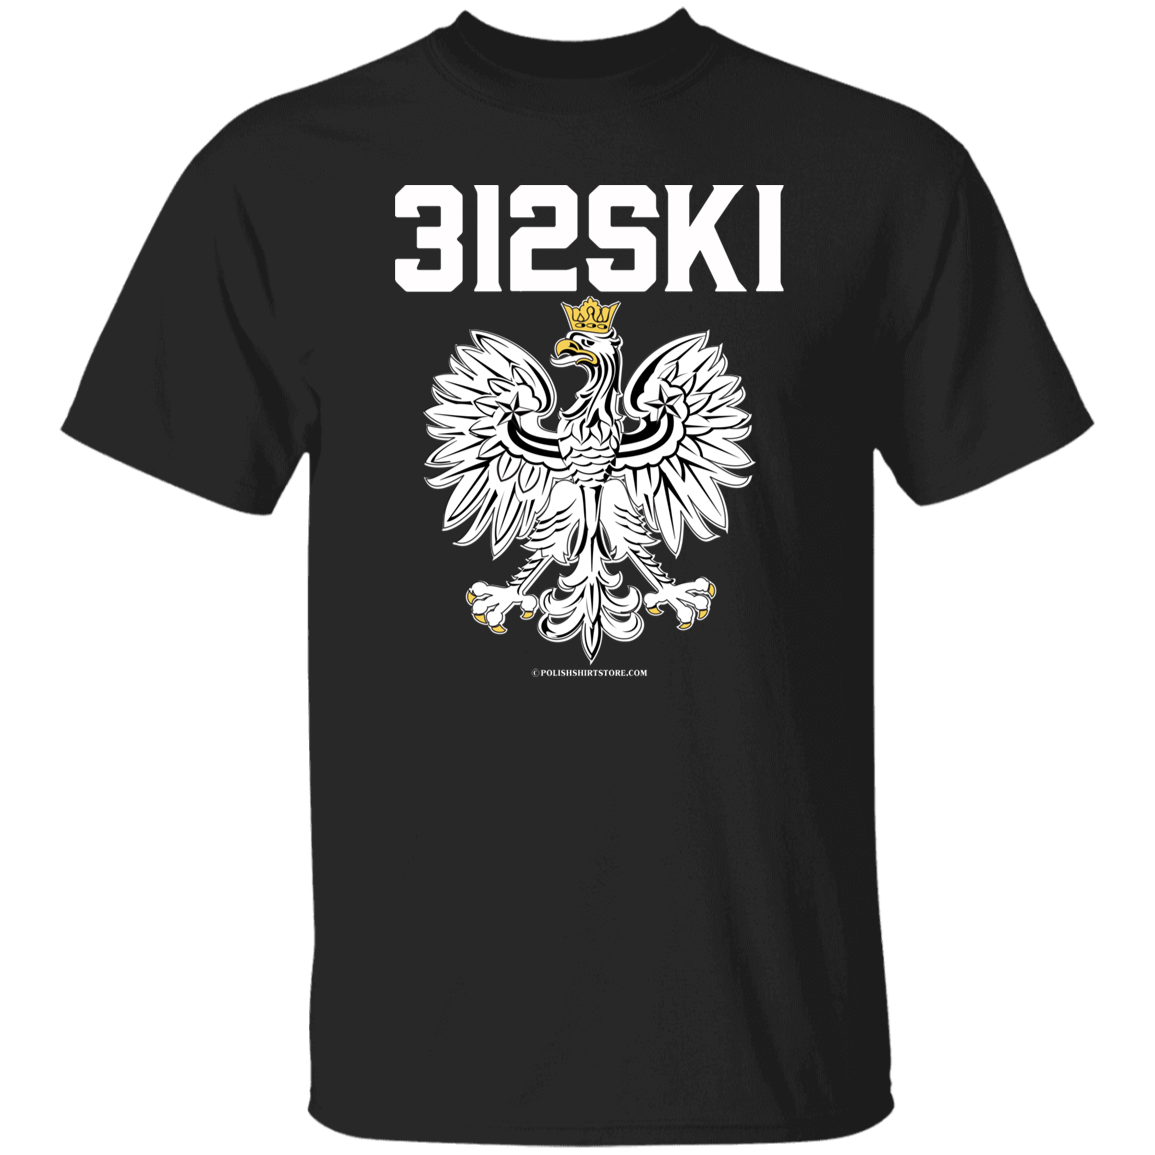 312SKI Apparel CustomCat G500 5.3 oz. T-Shirt Black S